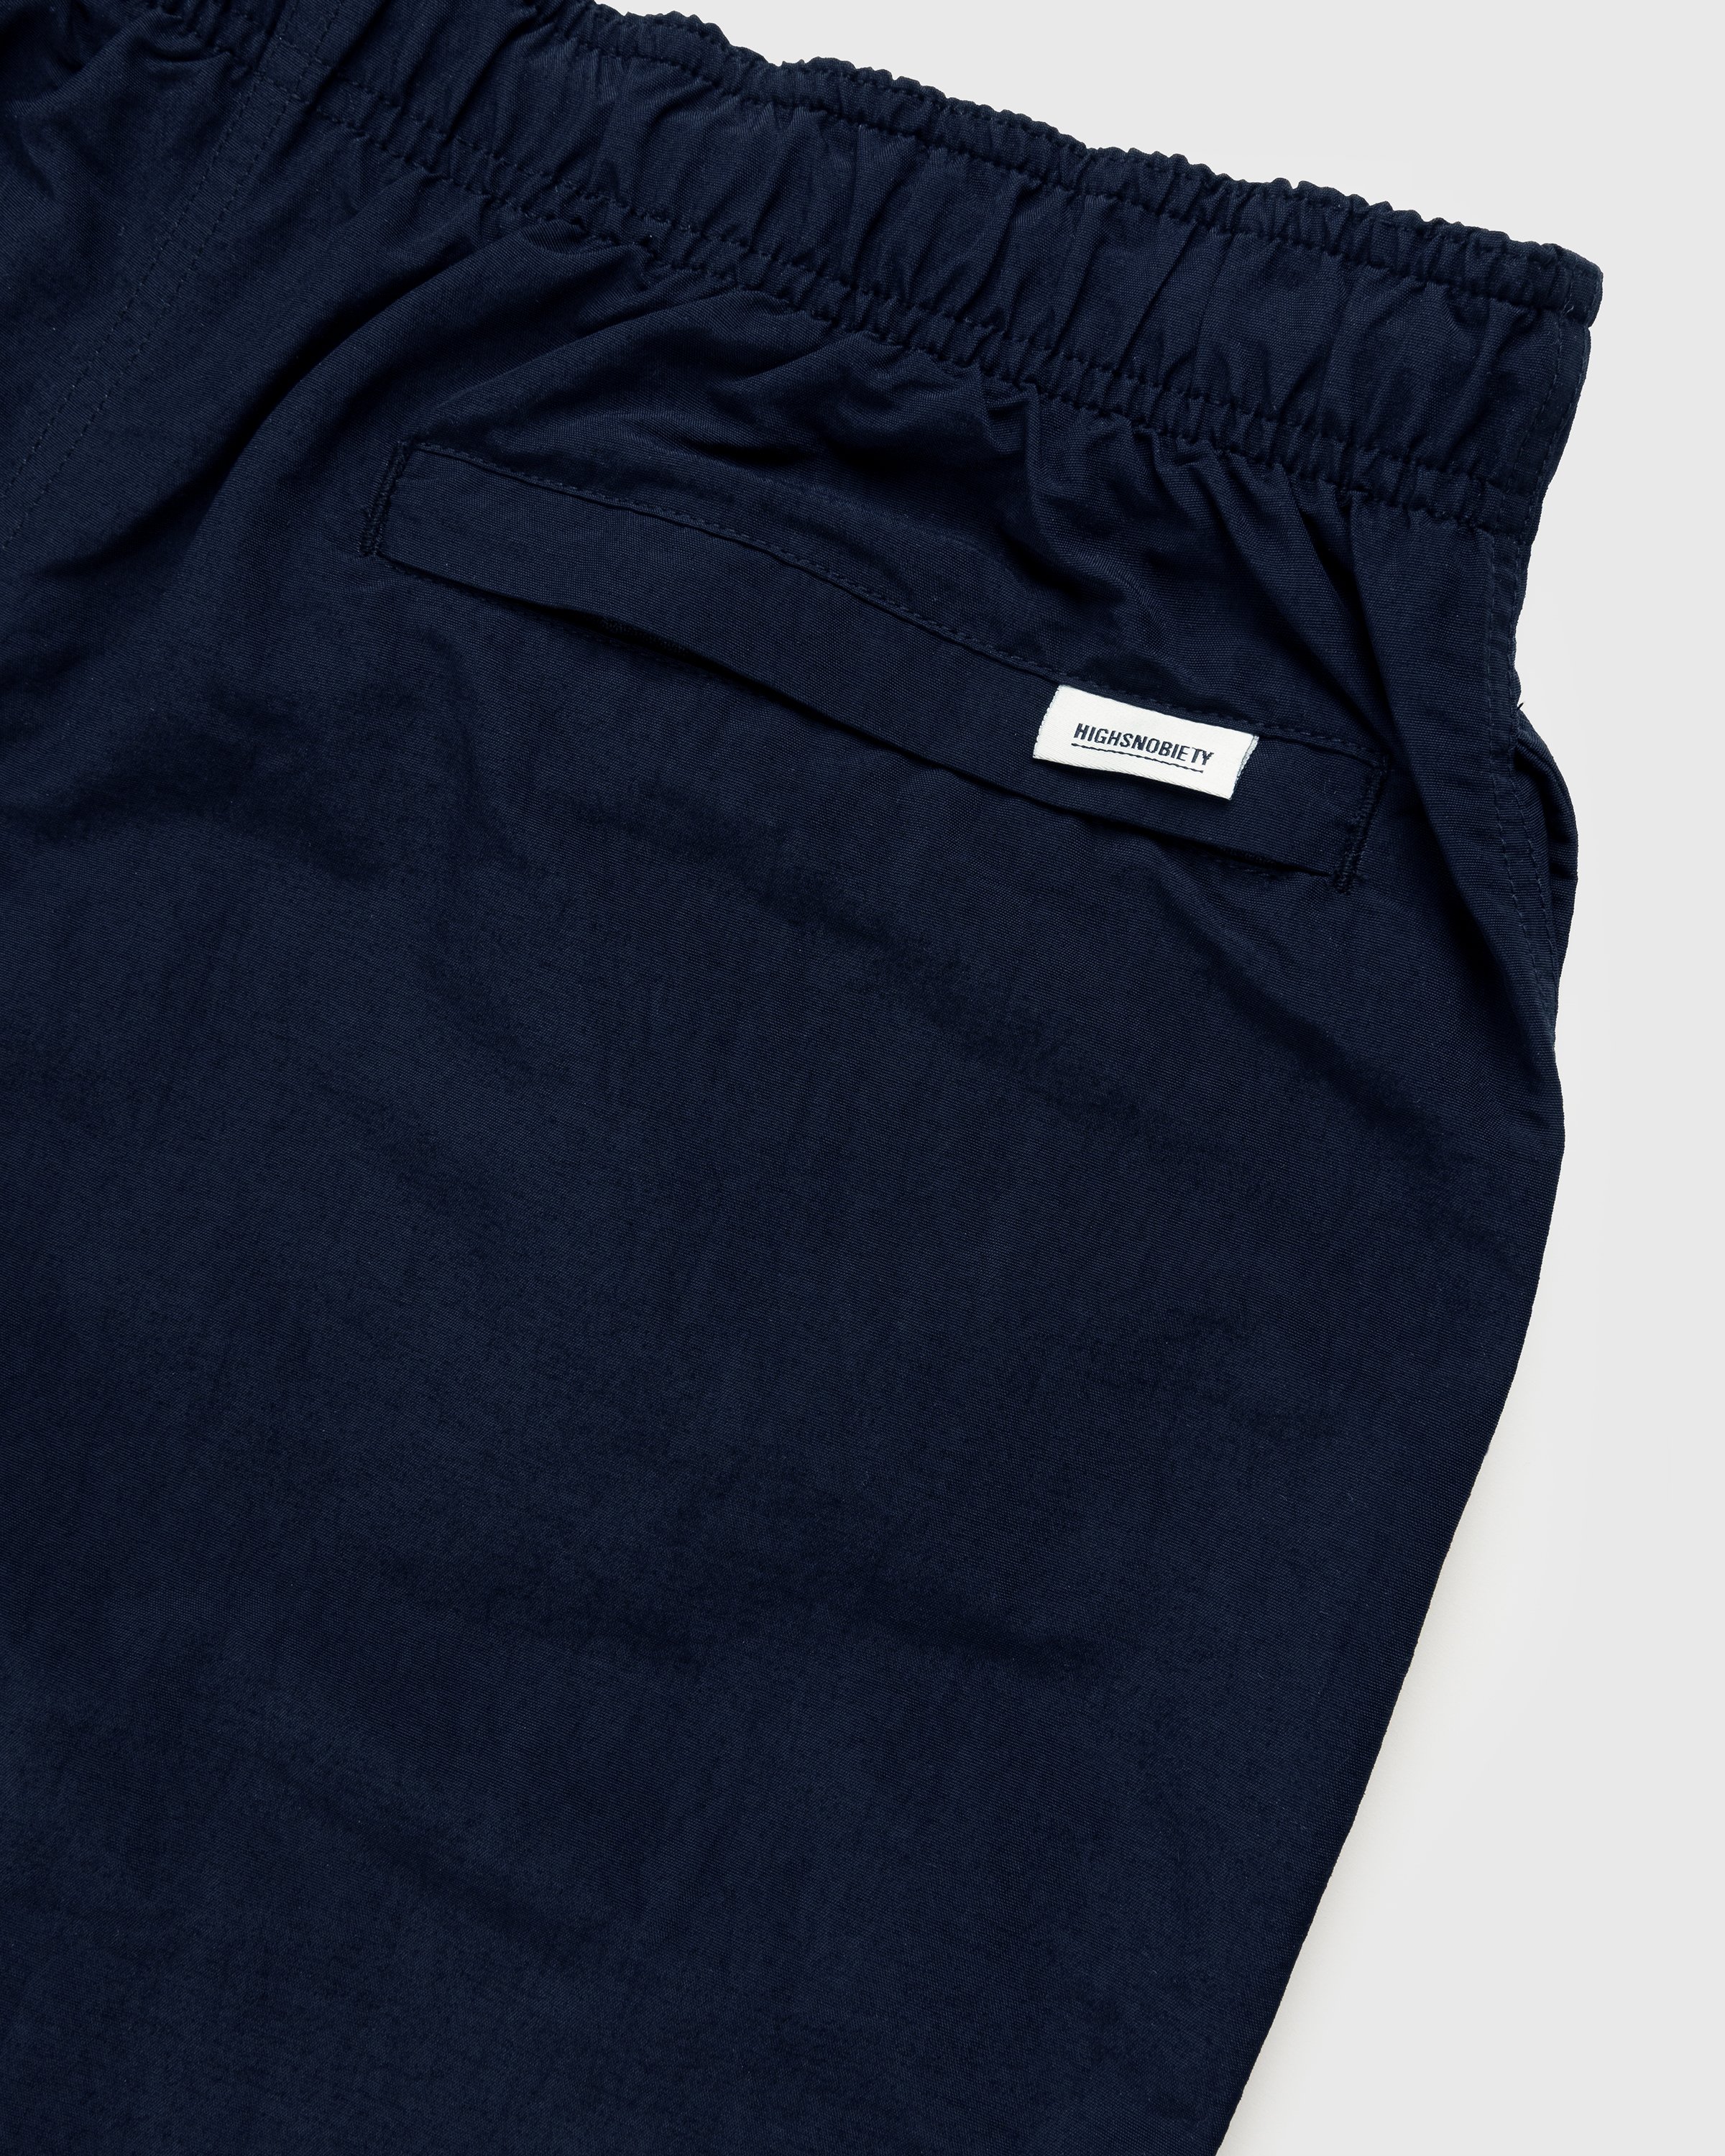 RUF x Highsnobiety - Water Shorts Navy - Clothing - Blue - Image 7